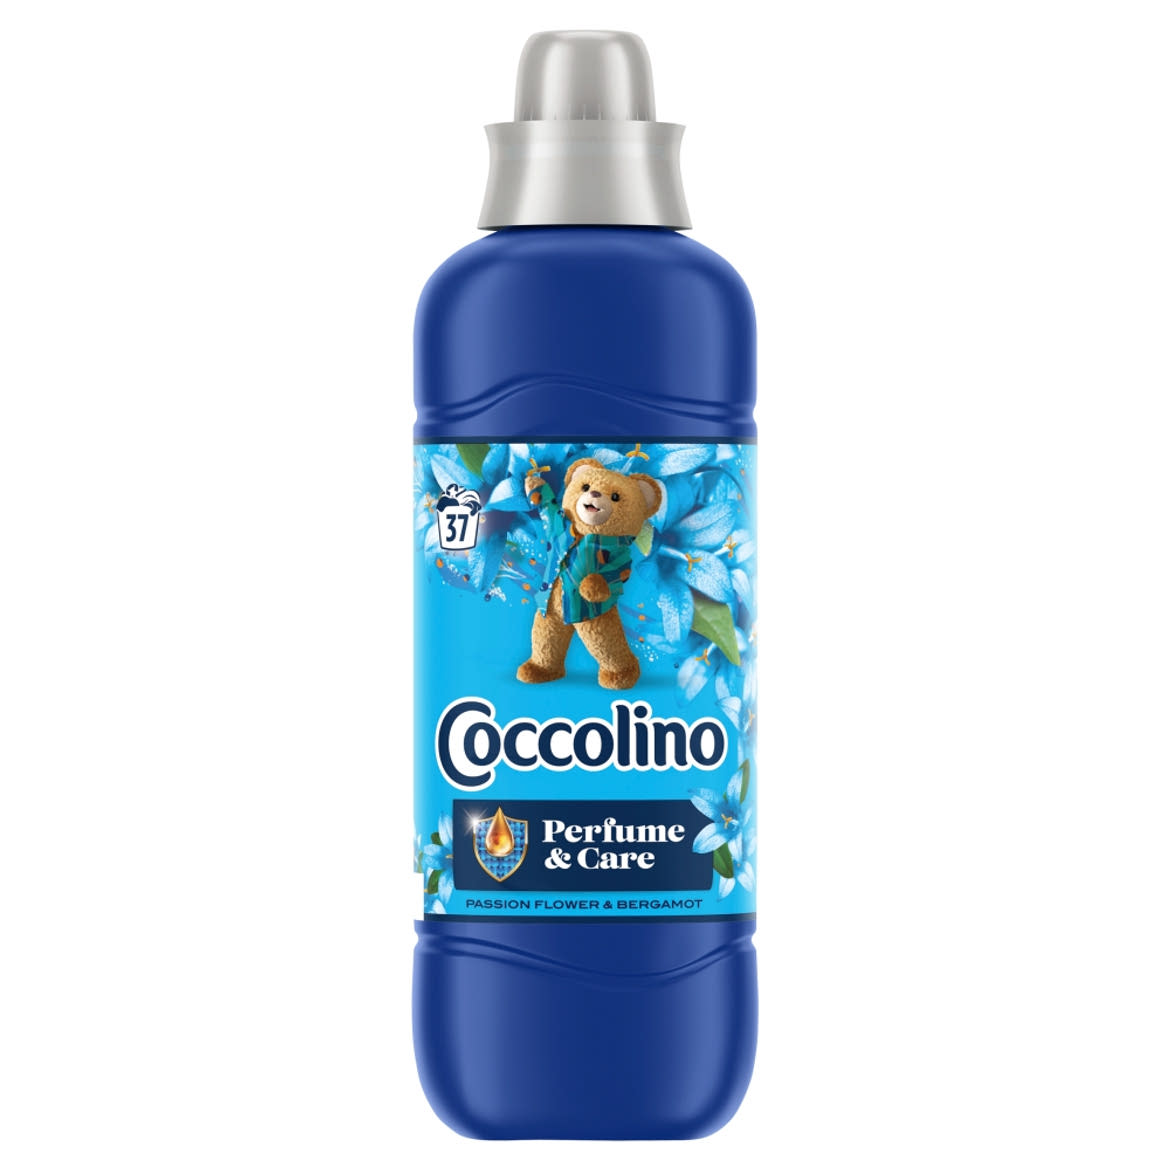 Coccolino Perfume & Care Passion Flower & Bergamot öblítőkoncentrátum 37 mosás